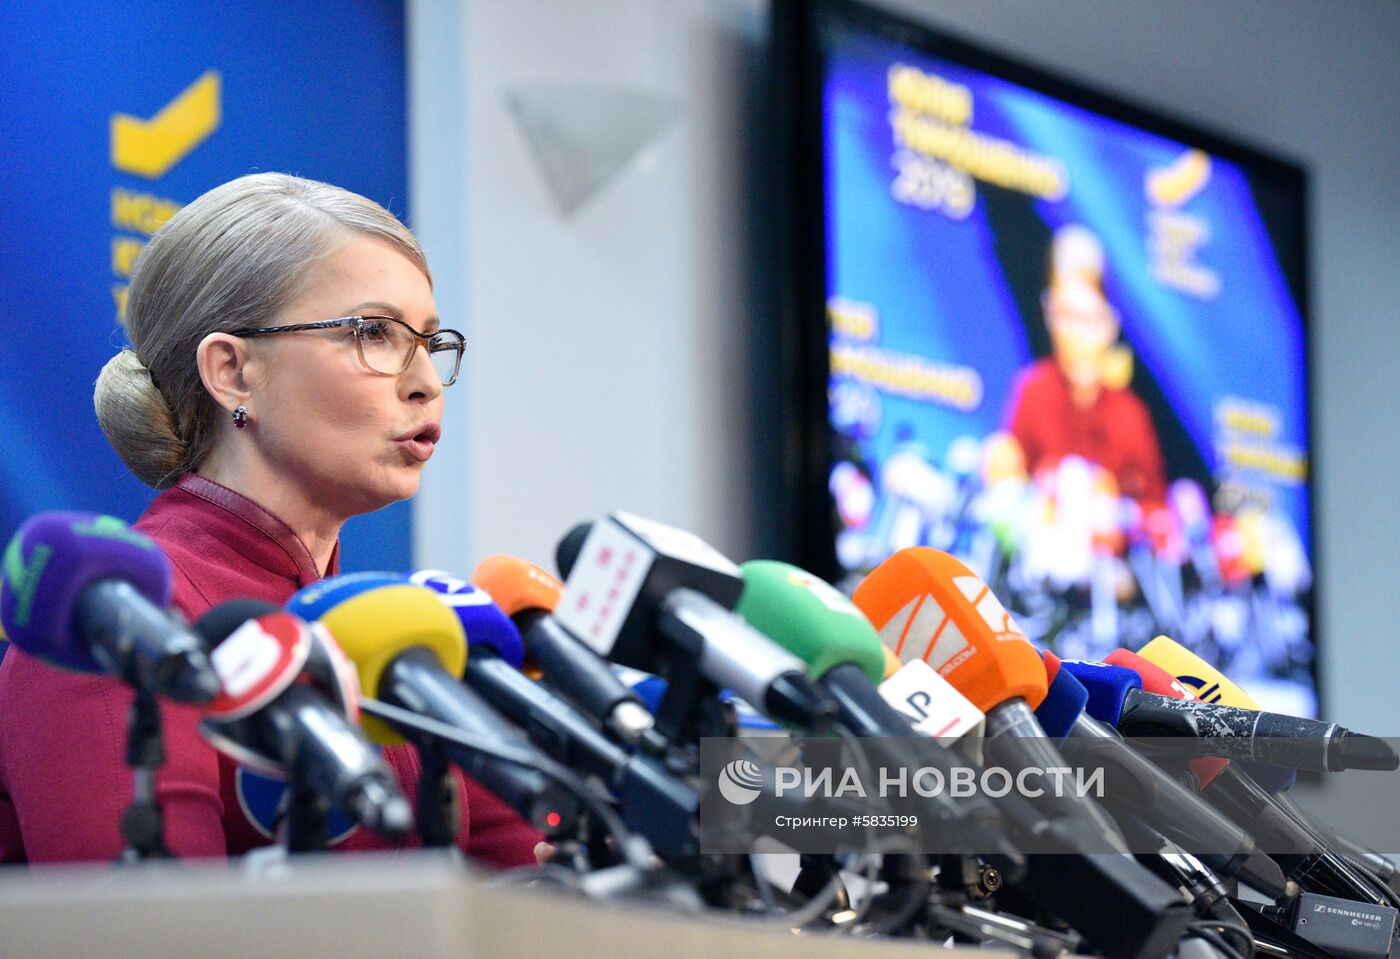 П/к лидера партии "Батькивщина" Ю. Тимошенко